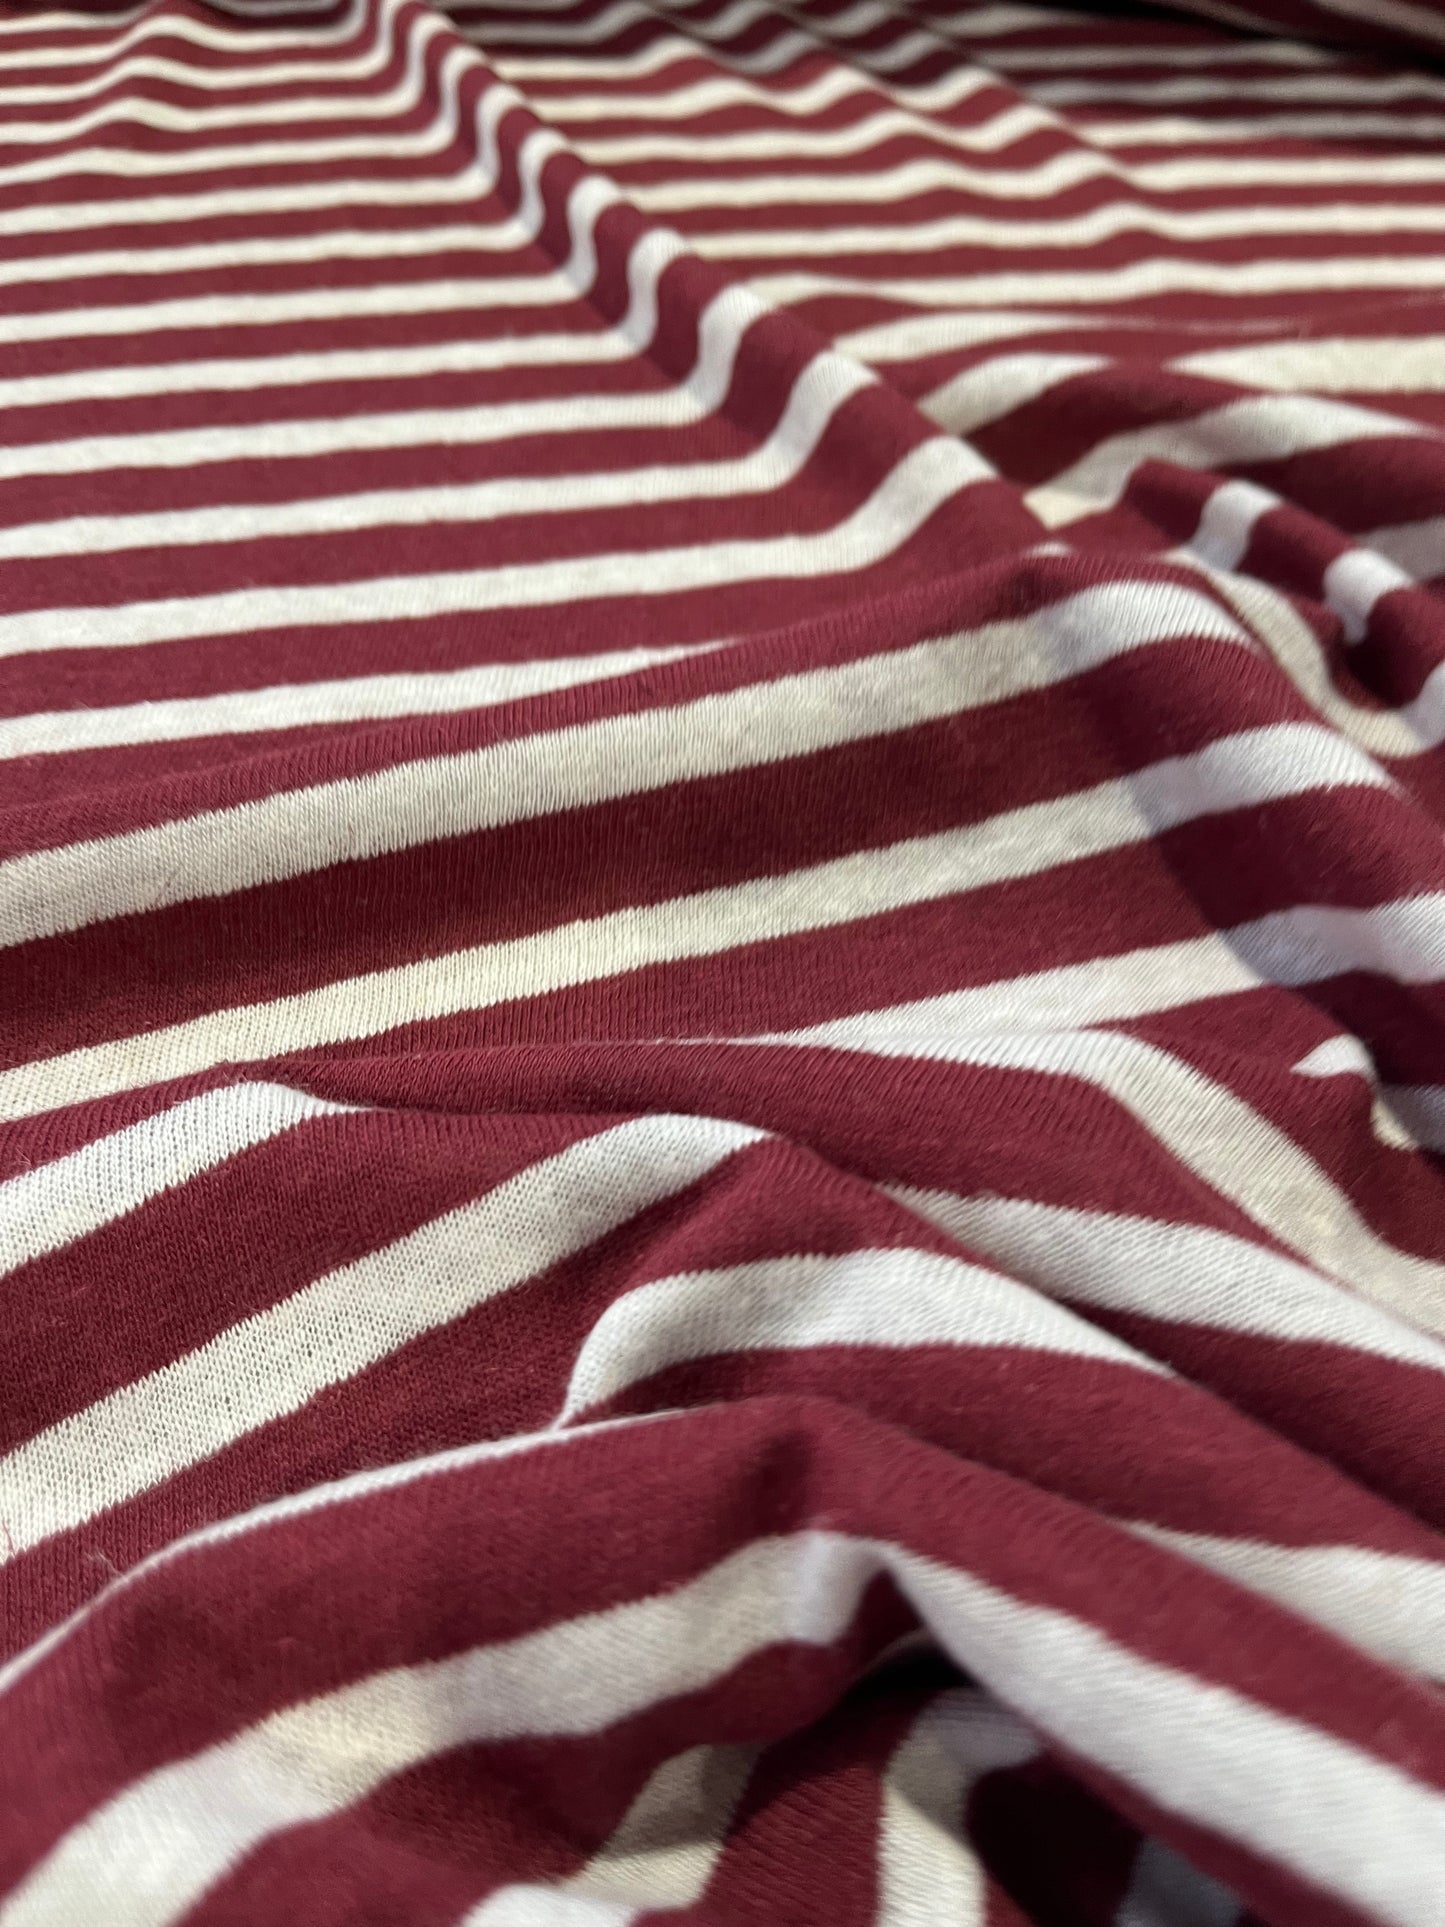 MERANO 007 jersey linen/cotton stripes